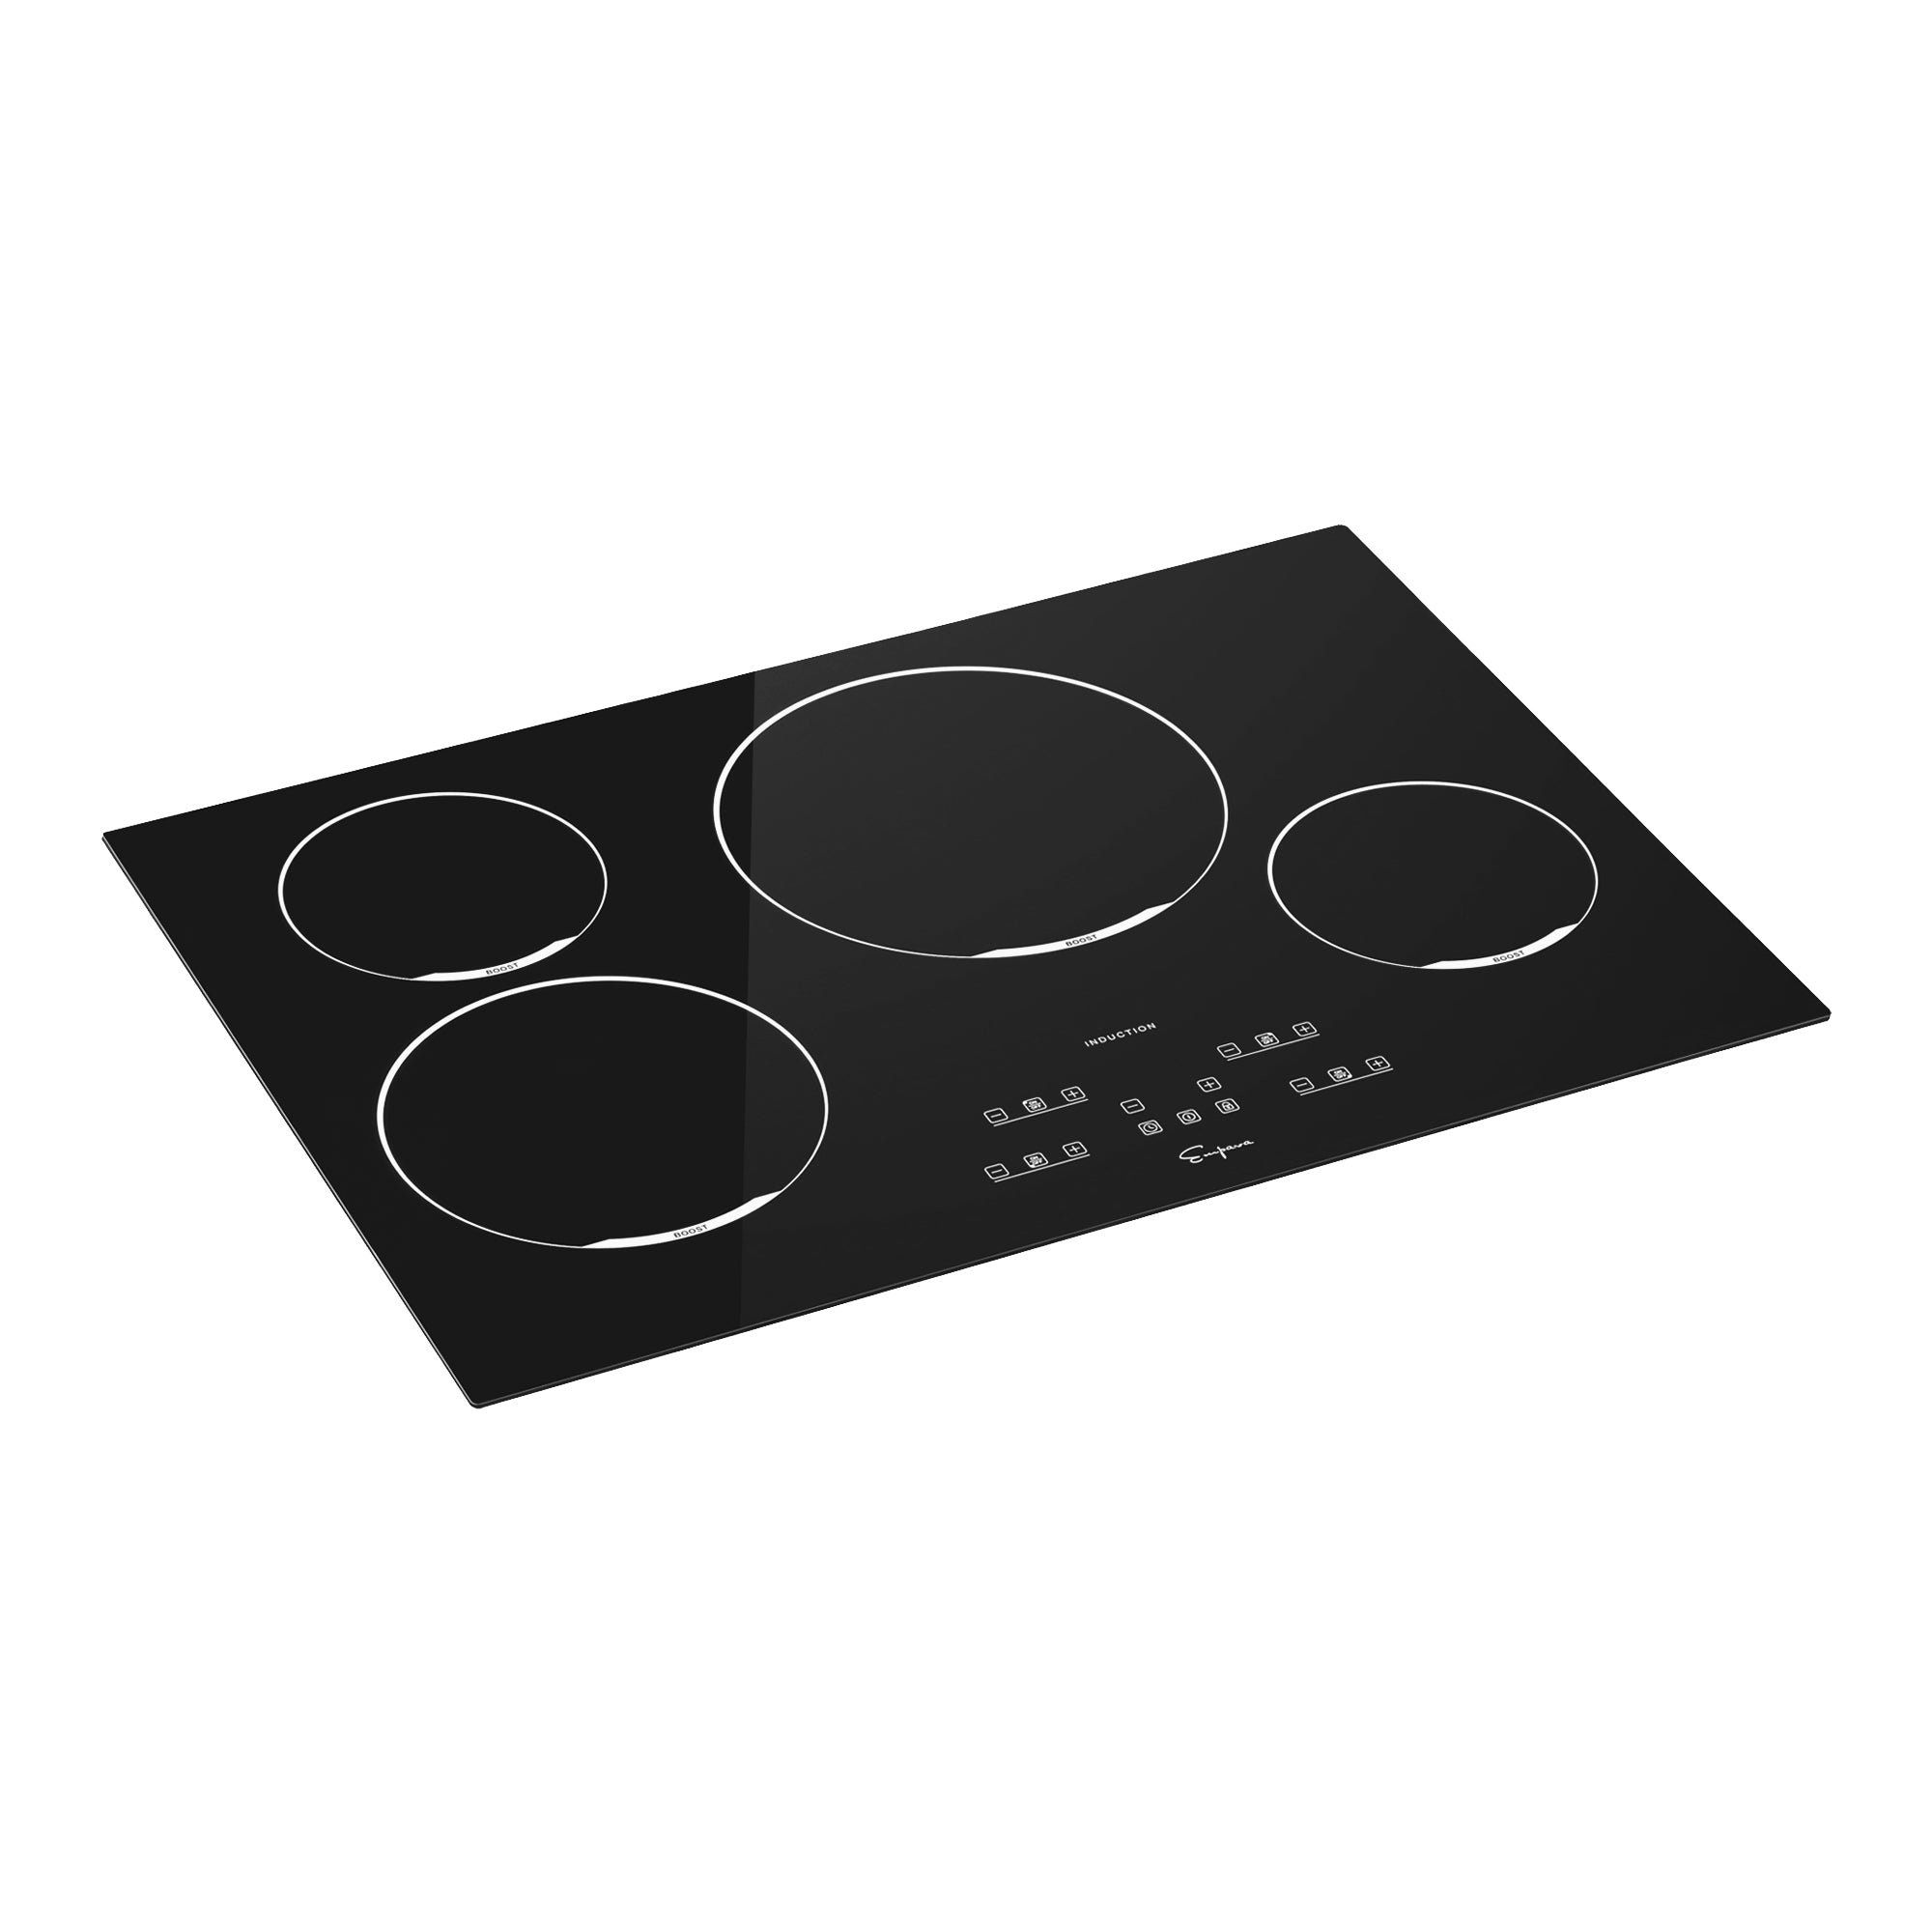 Empava 30EC02 30 Inch 4 Elements Black Induction Cooktop